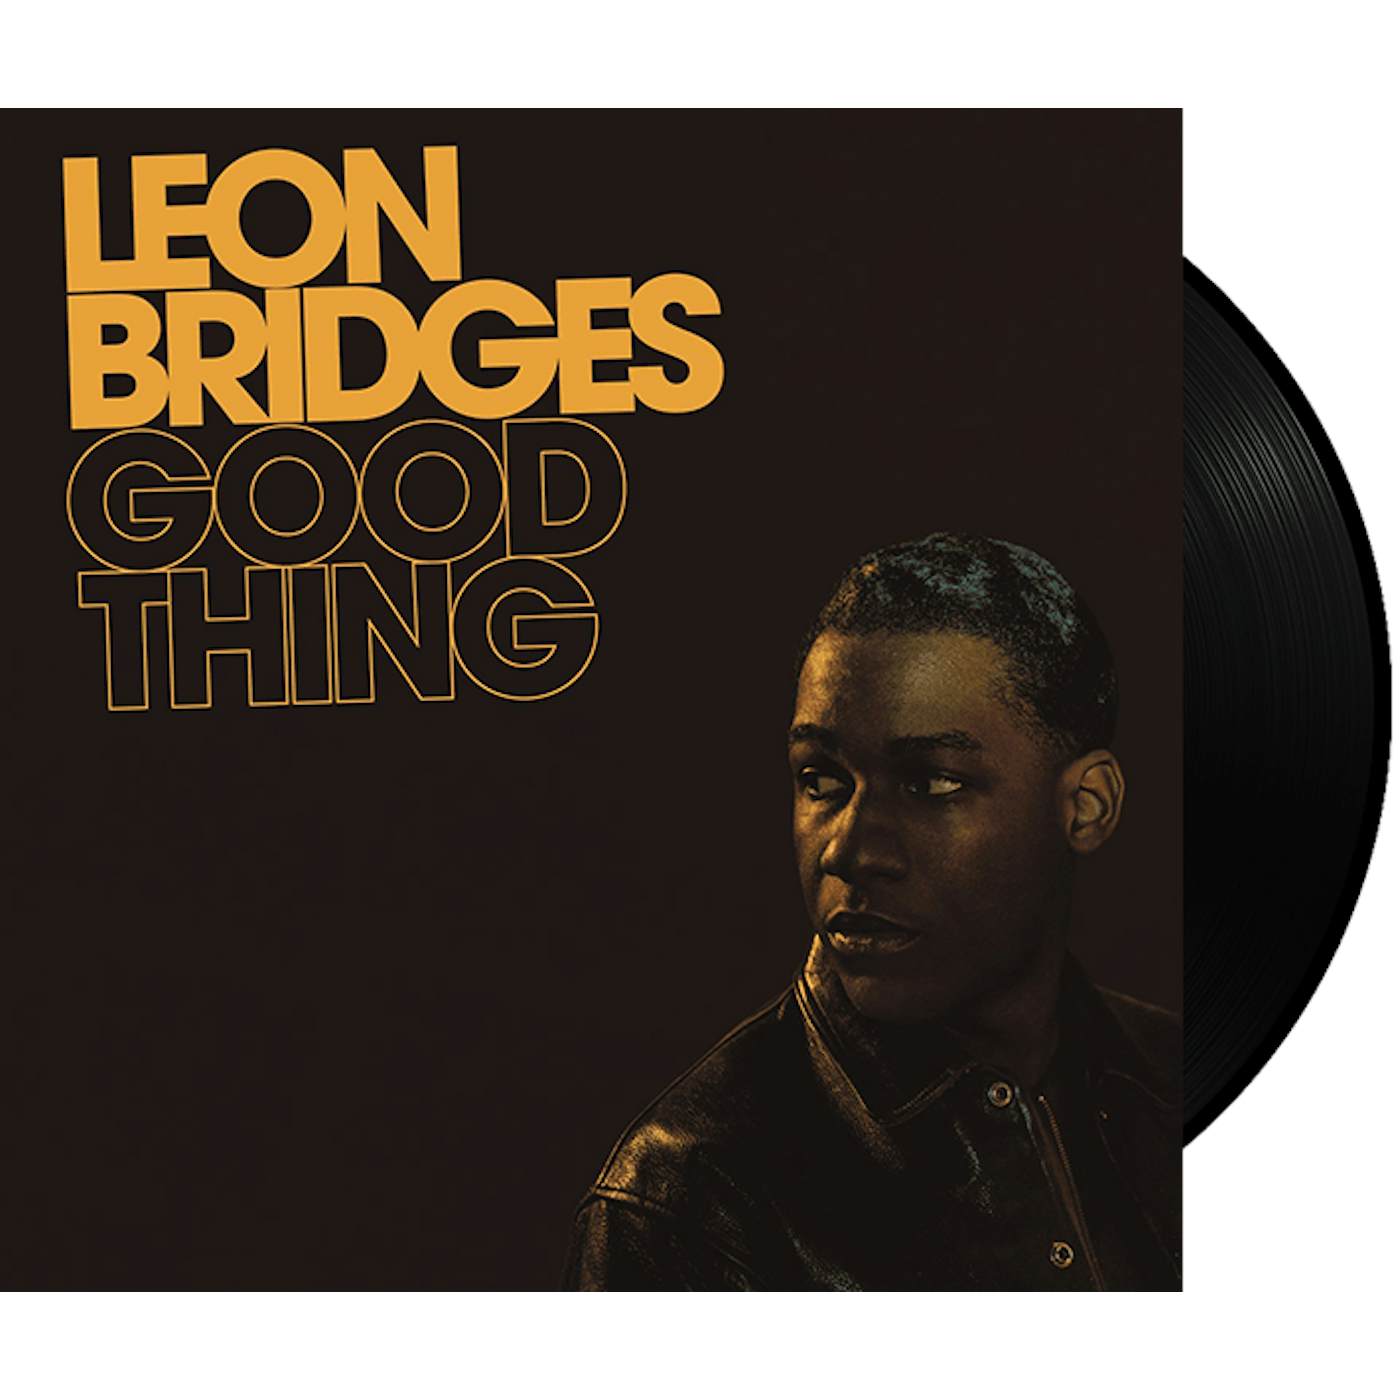 Leon Bridges Good Thing